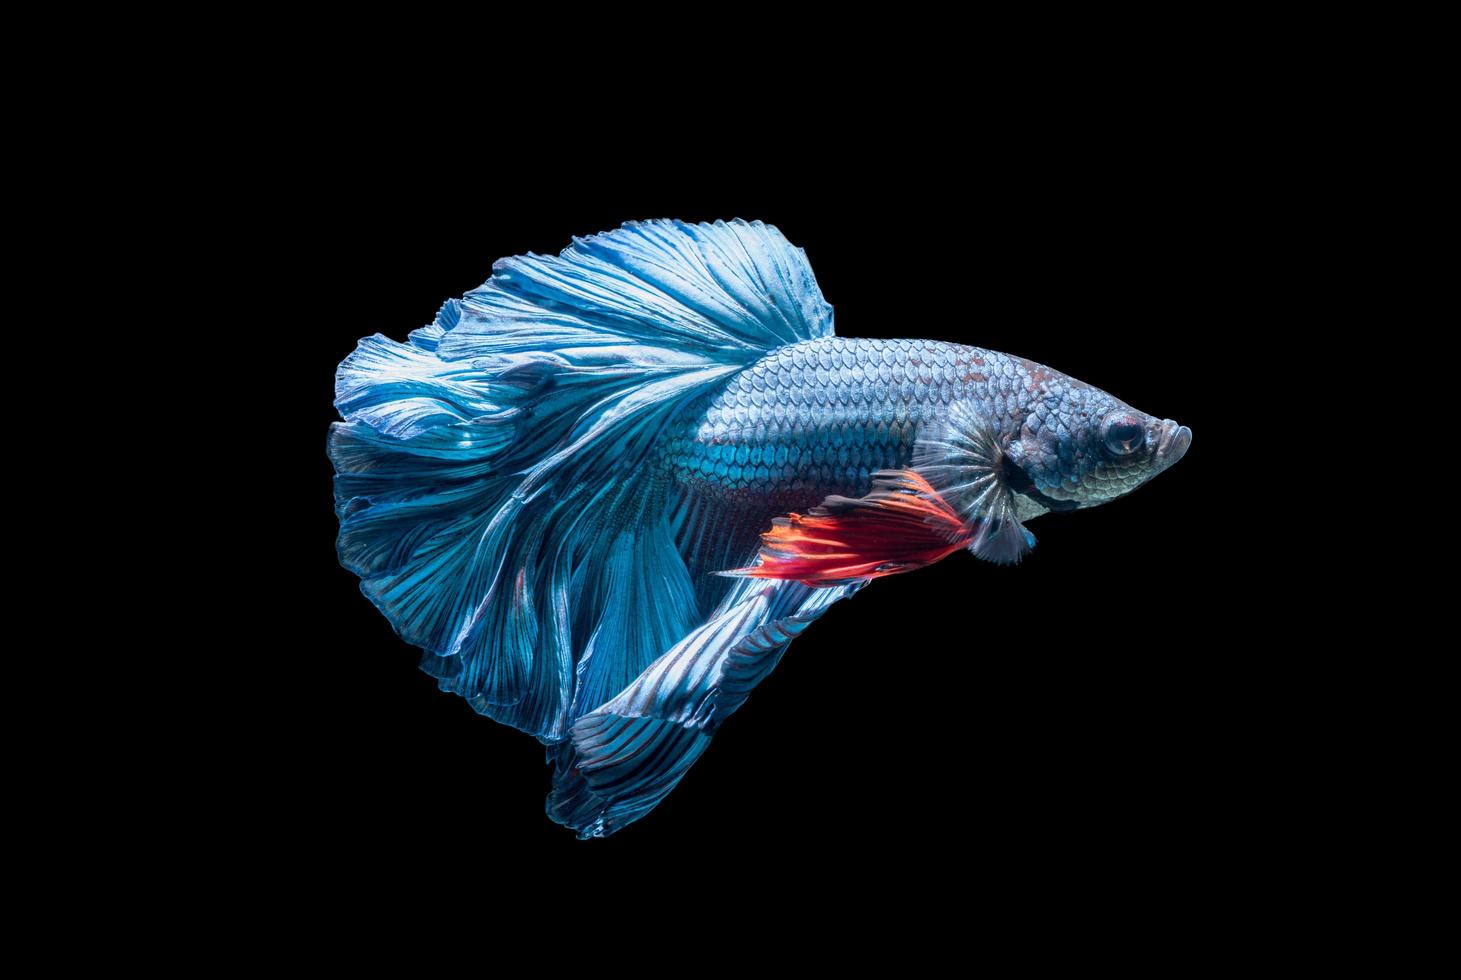 azul siamês brigando peixe, betta splendens isolado foto